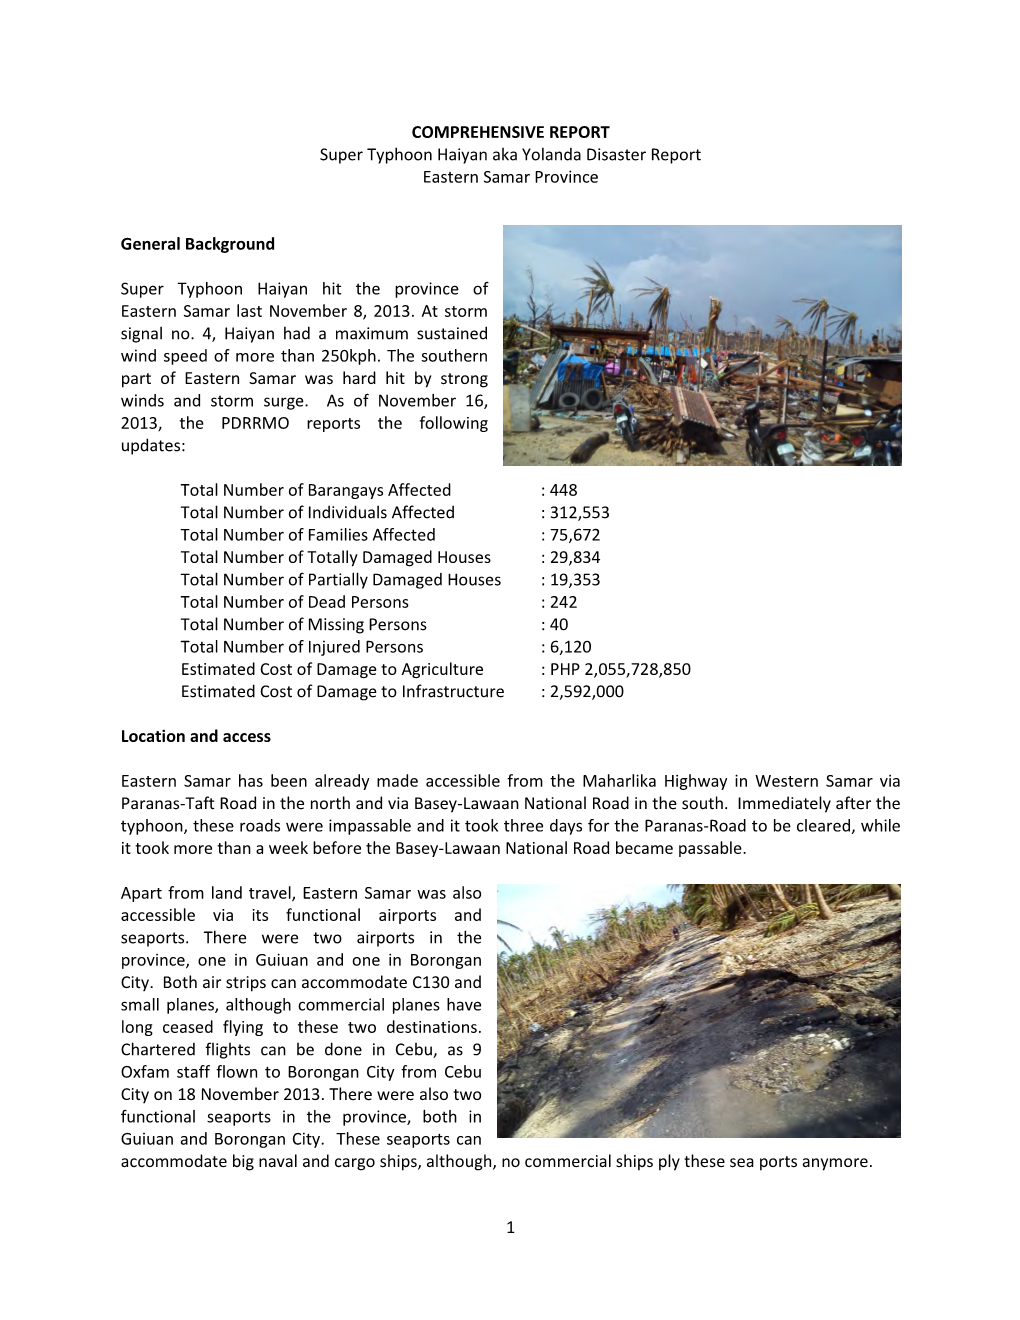 COMPREHENSIVE REPORT Super Typhoon Haiyan Aka Yolanda Disaster Report Eastern Samar Province